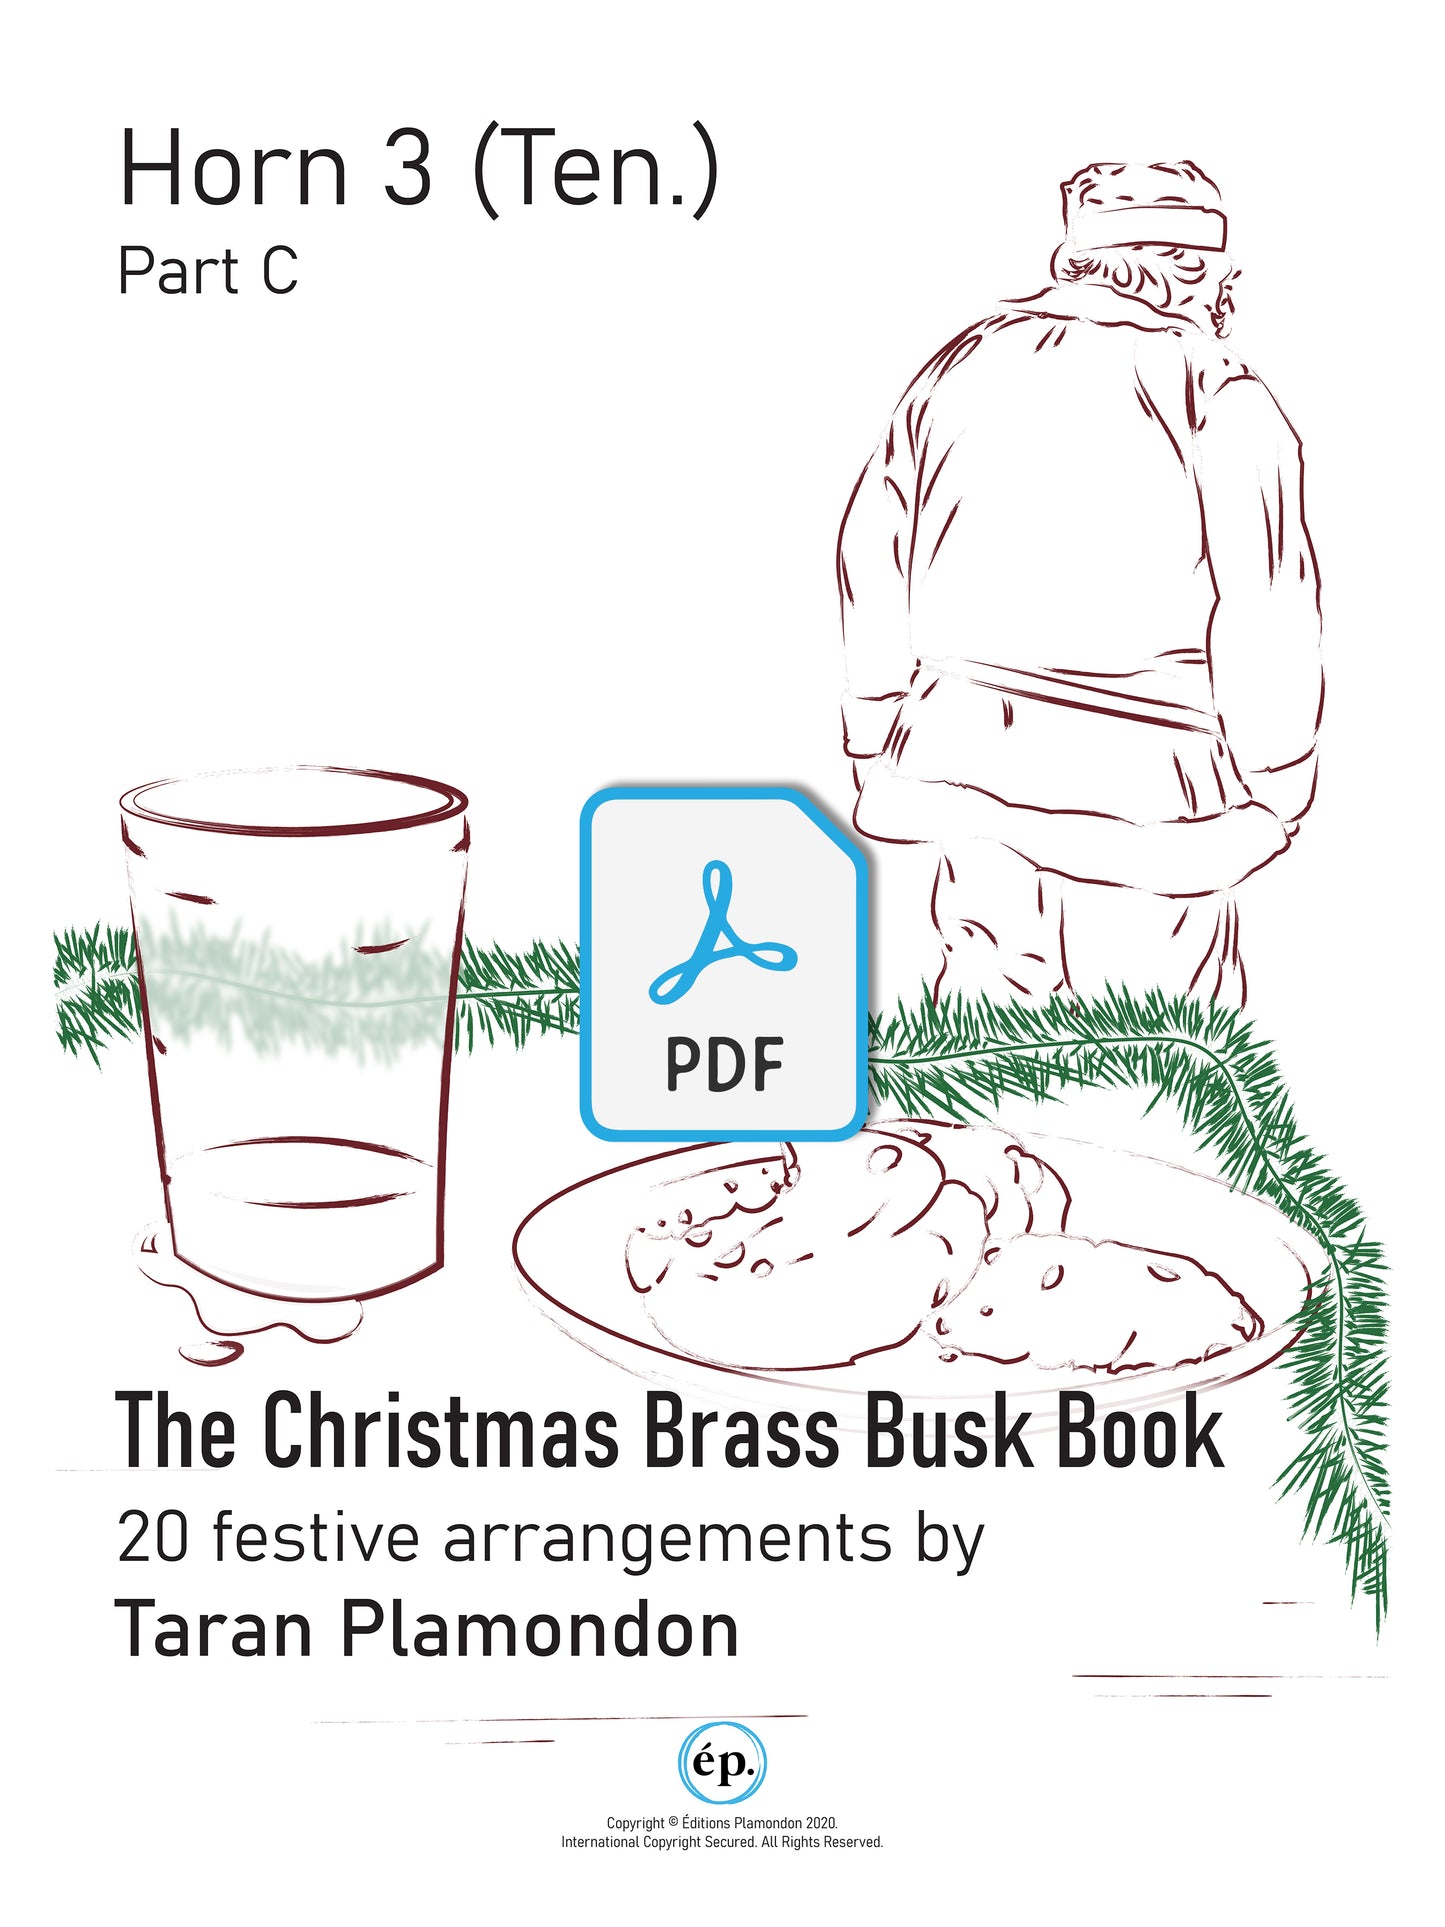 The Christmas Brass Busk Book - Digital Parts